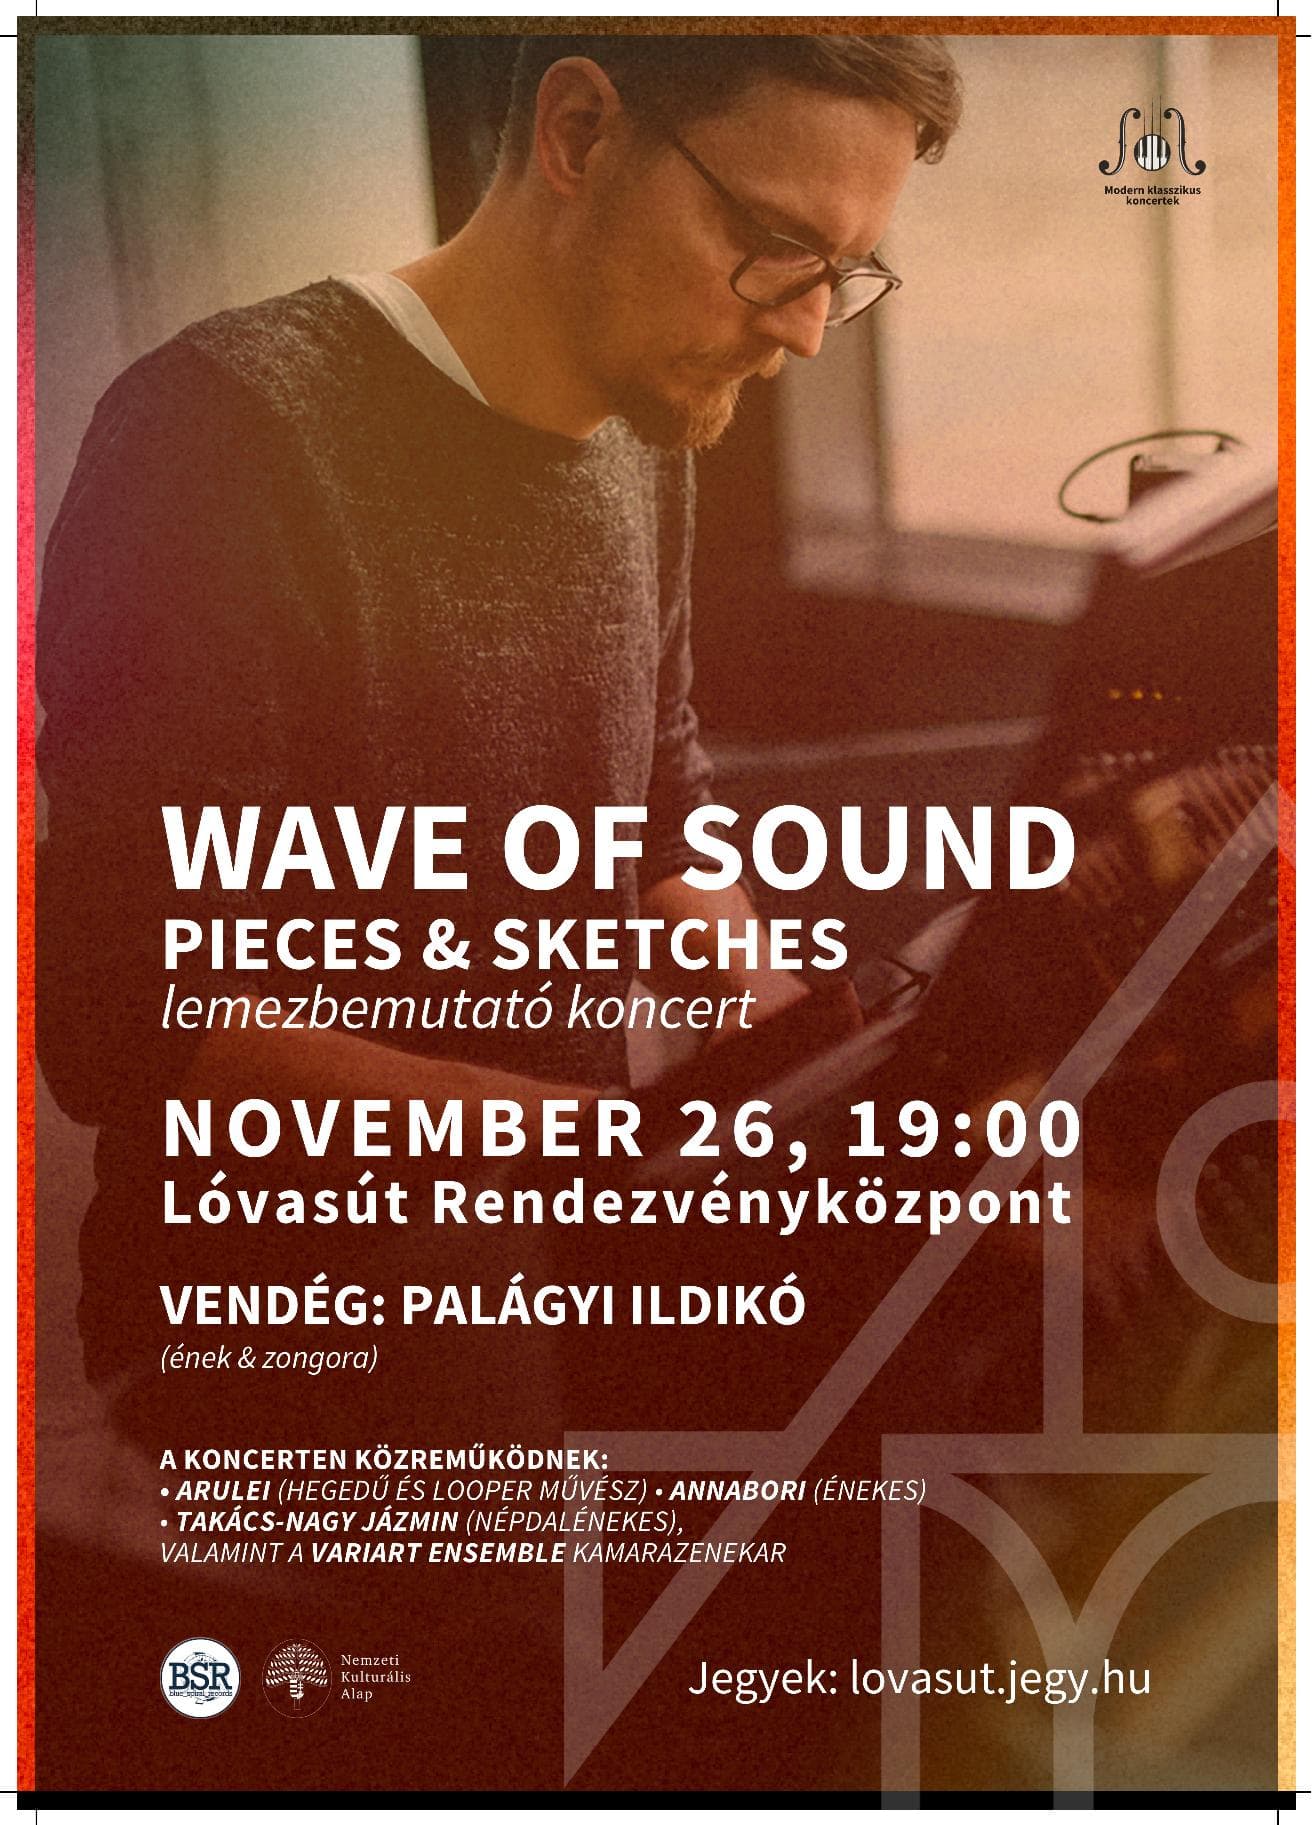 Wave of Sound: Pieces & Sketches lemezbemutató koncert